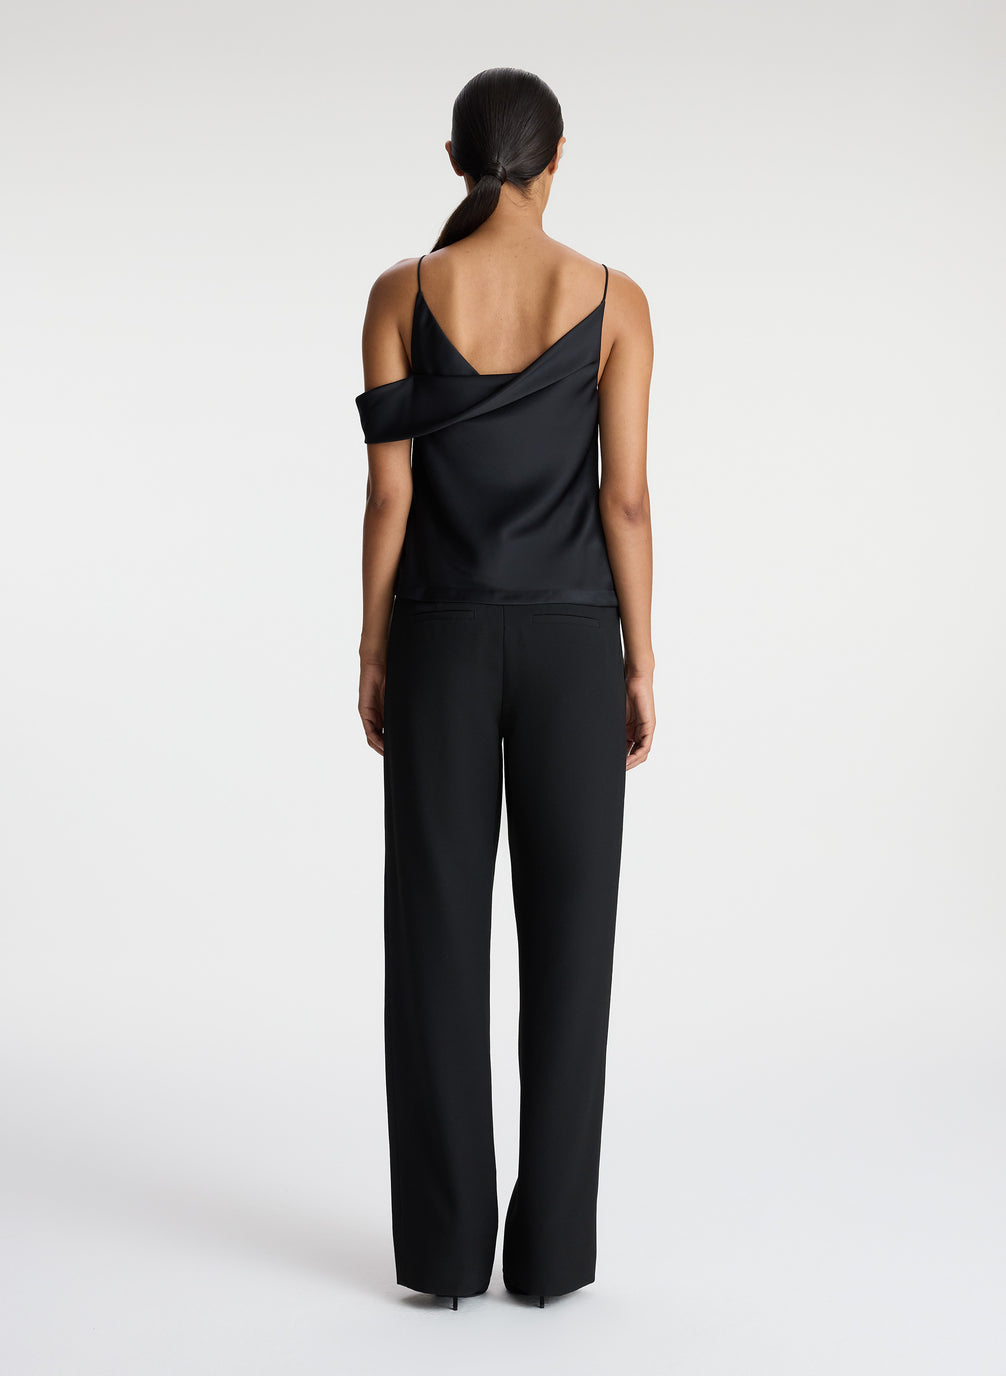 back view of woman wearing black satin asymmetric top with black pants